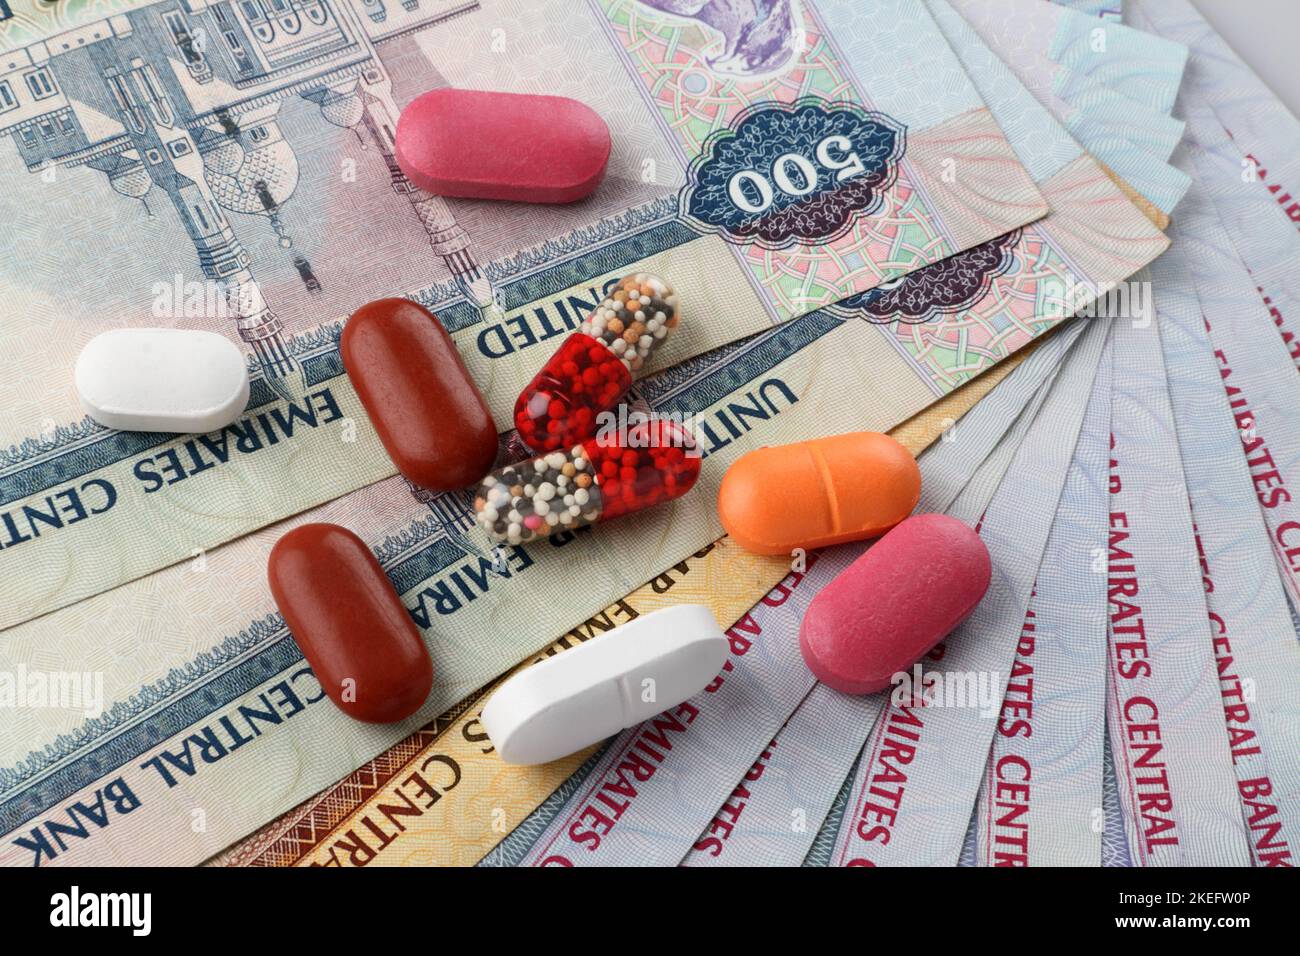 UAE Currency Dirhams and Medicine Pills Stock Photo